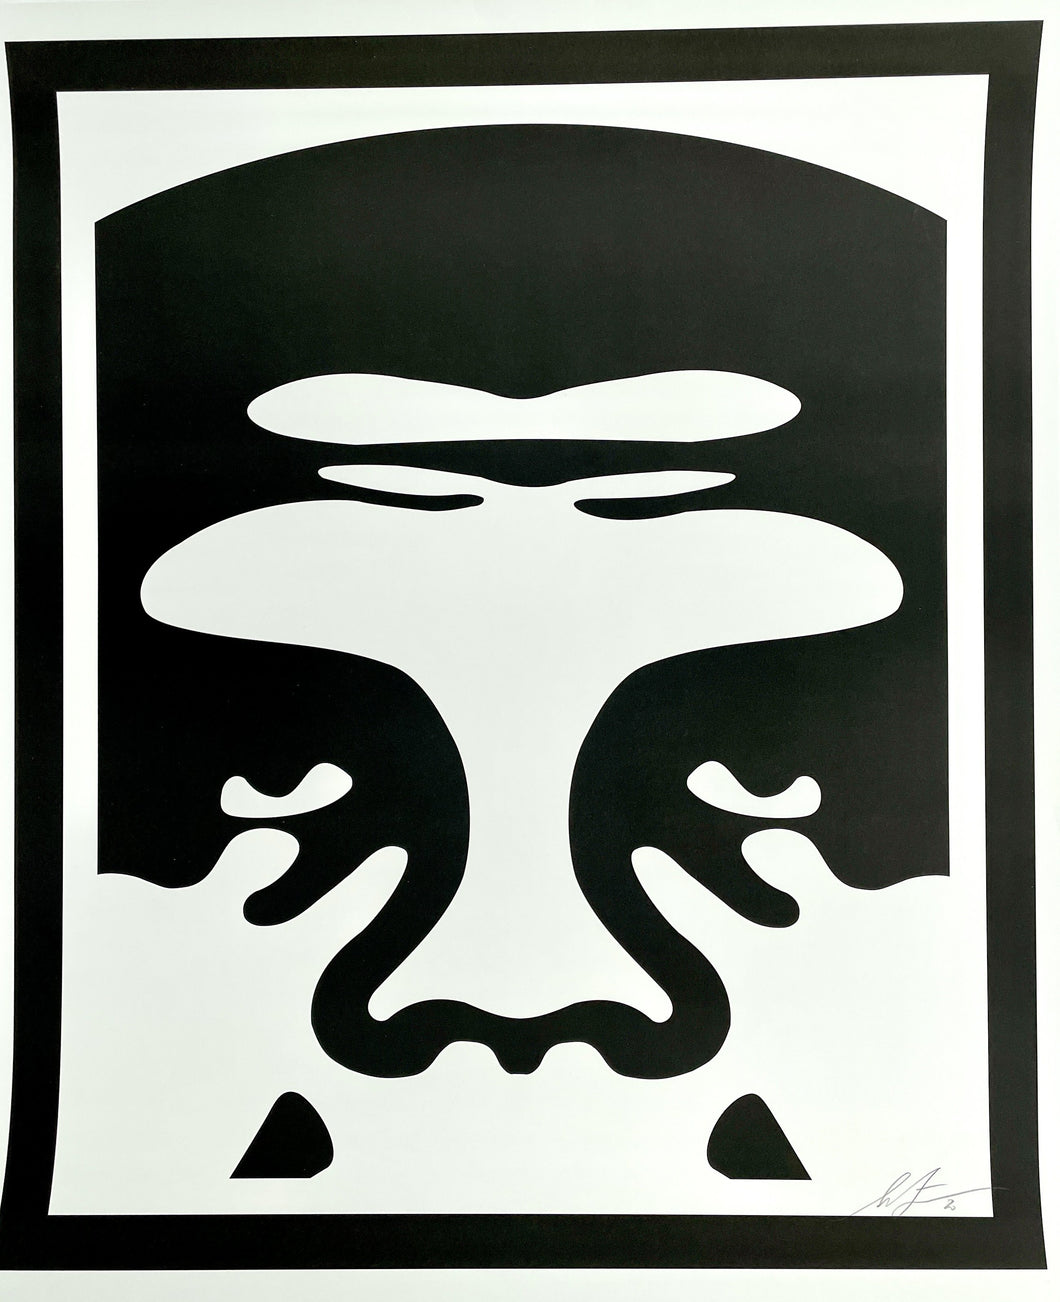 Obey 3-Face (Top Face) Print Shepard Fairey